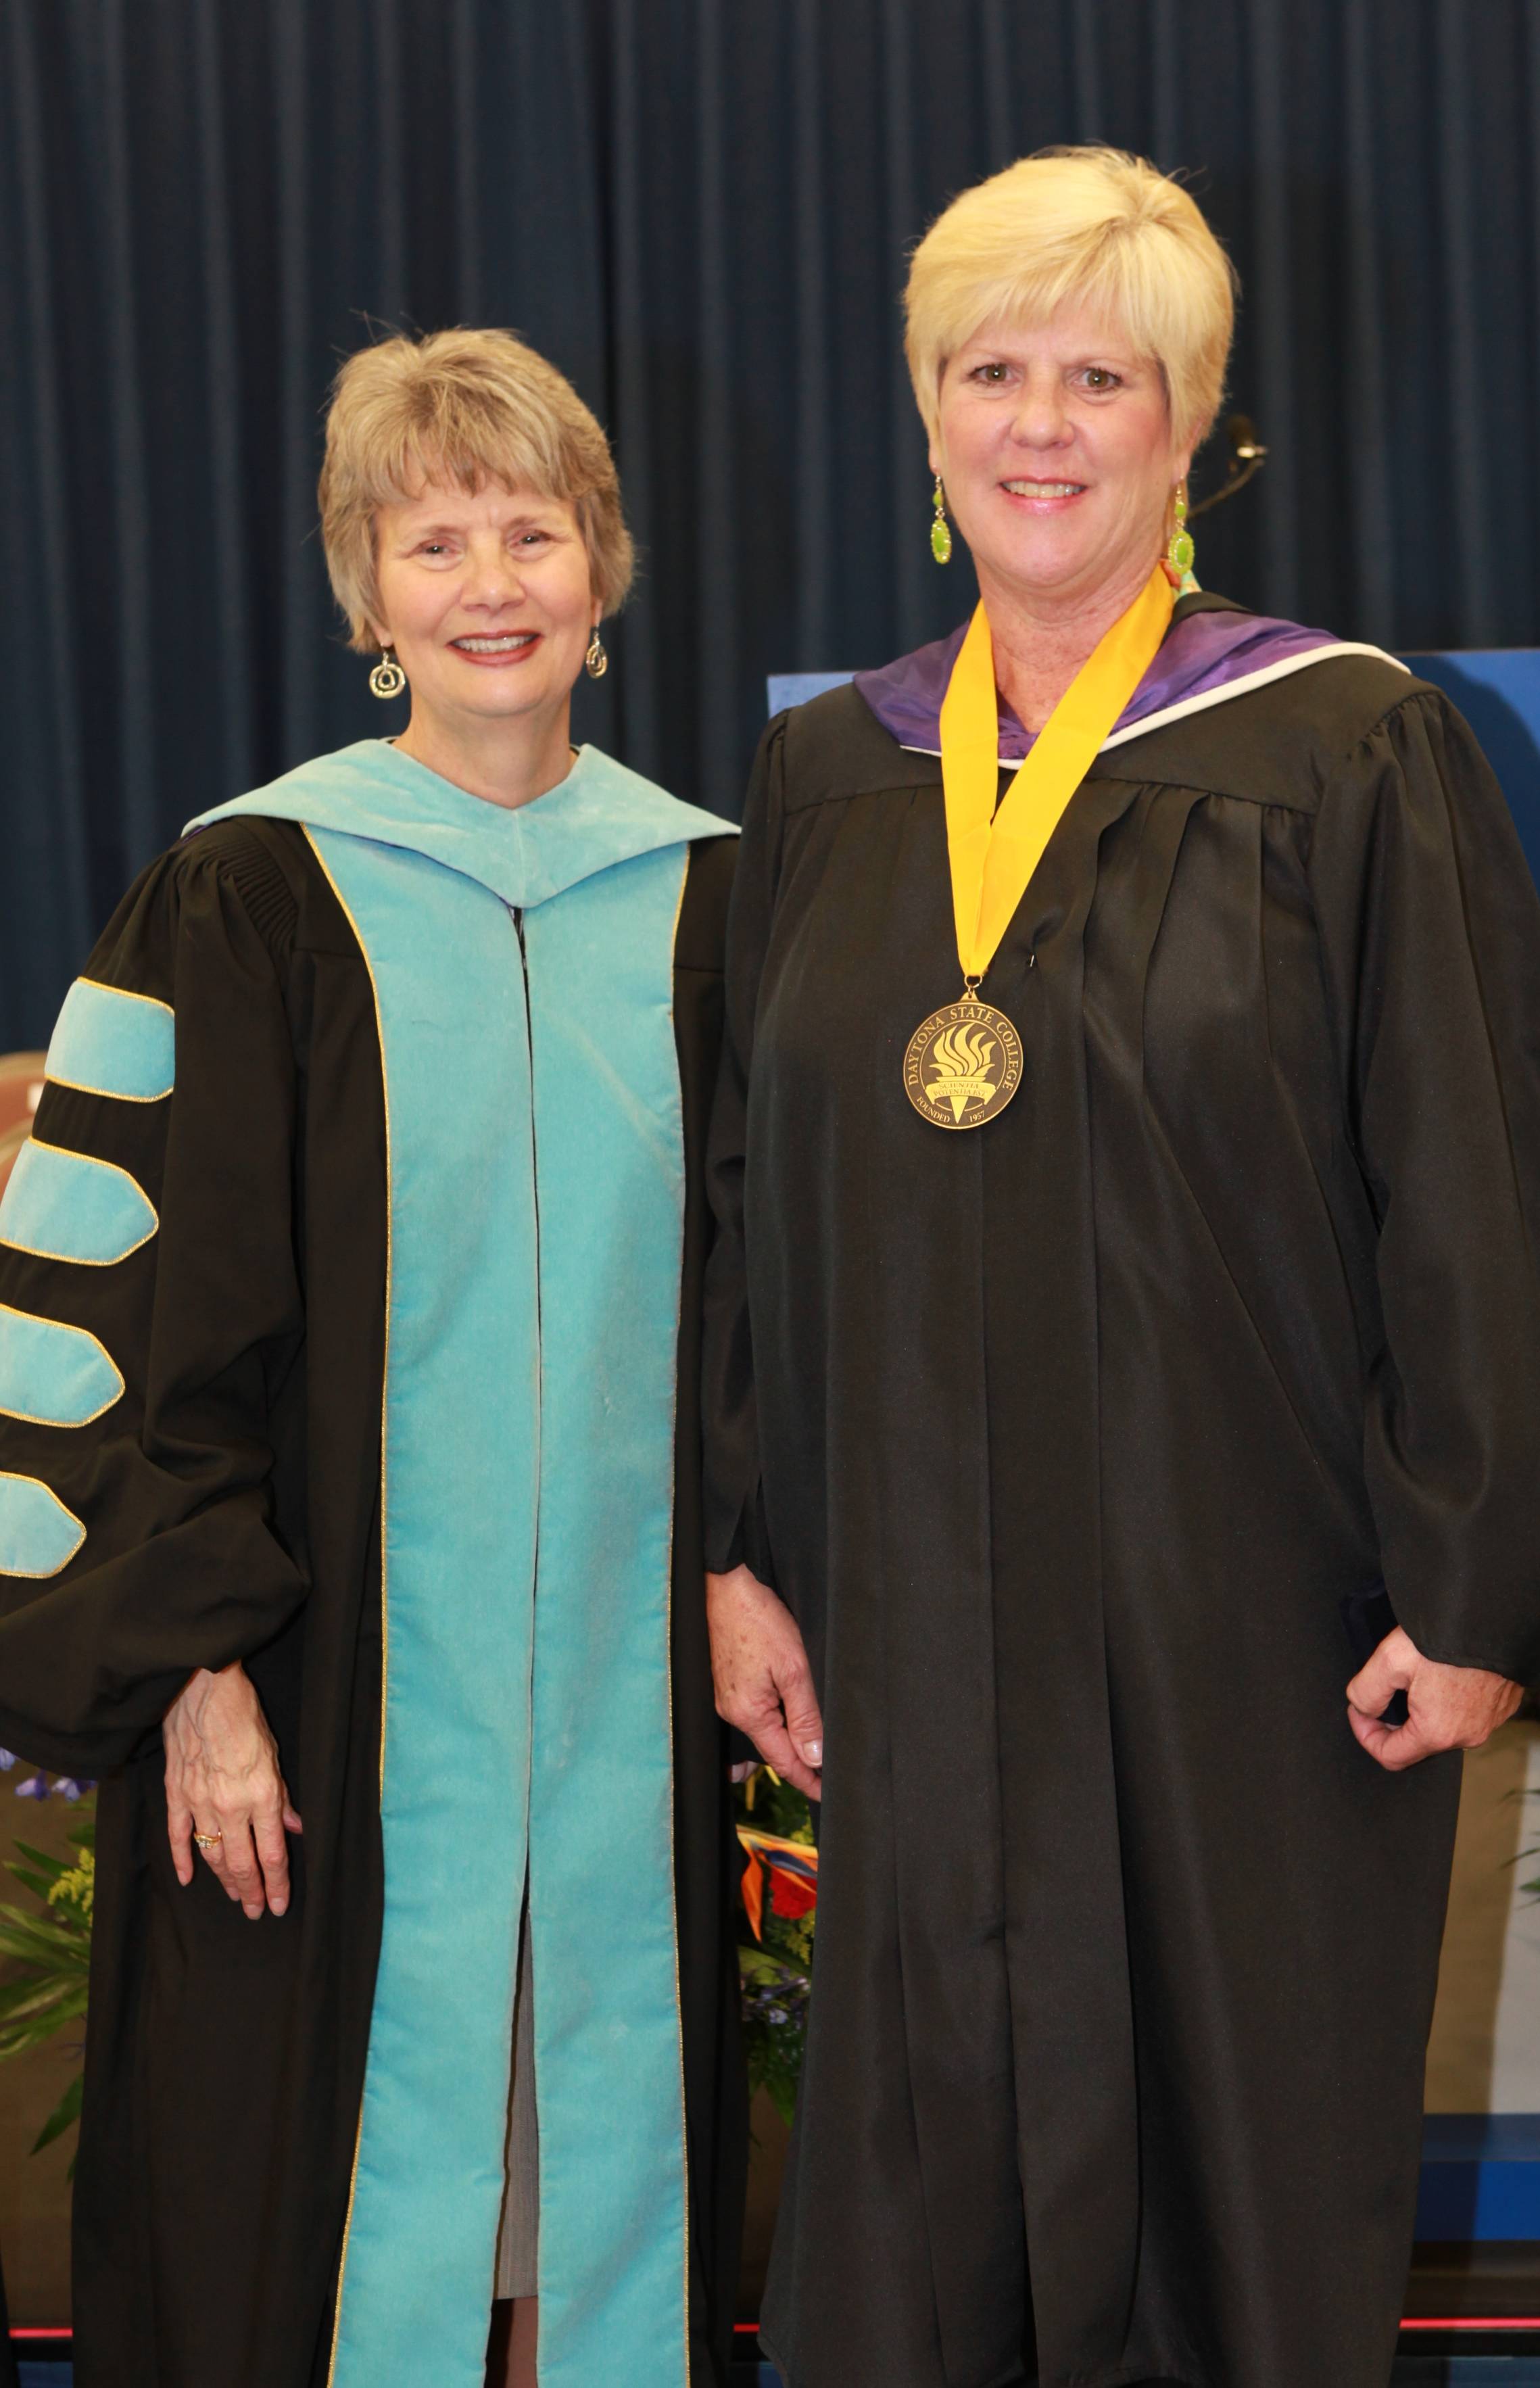 Robin Davis, 2013 recipient of the Presidential Teaching Excellence Award